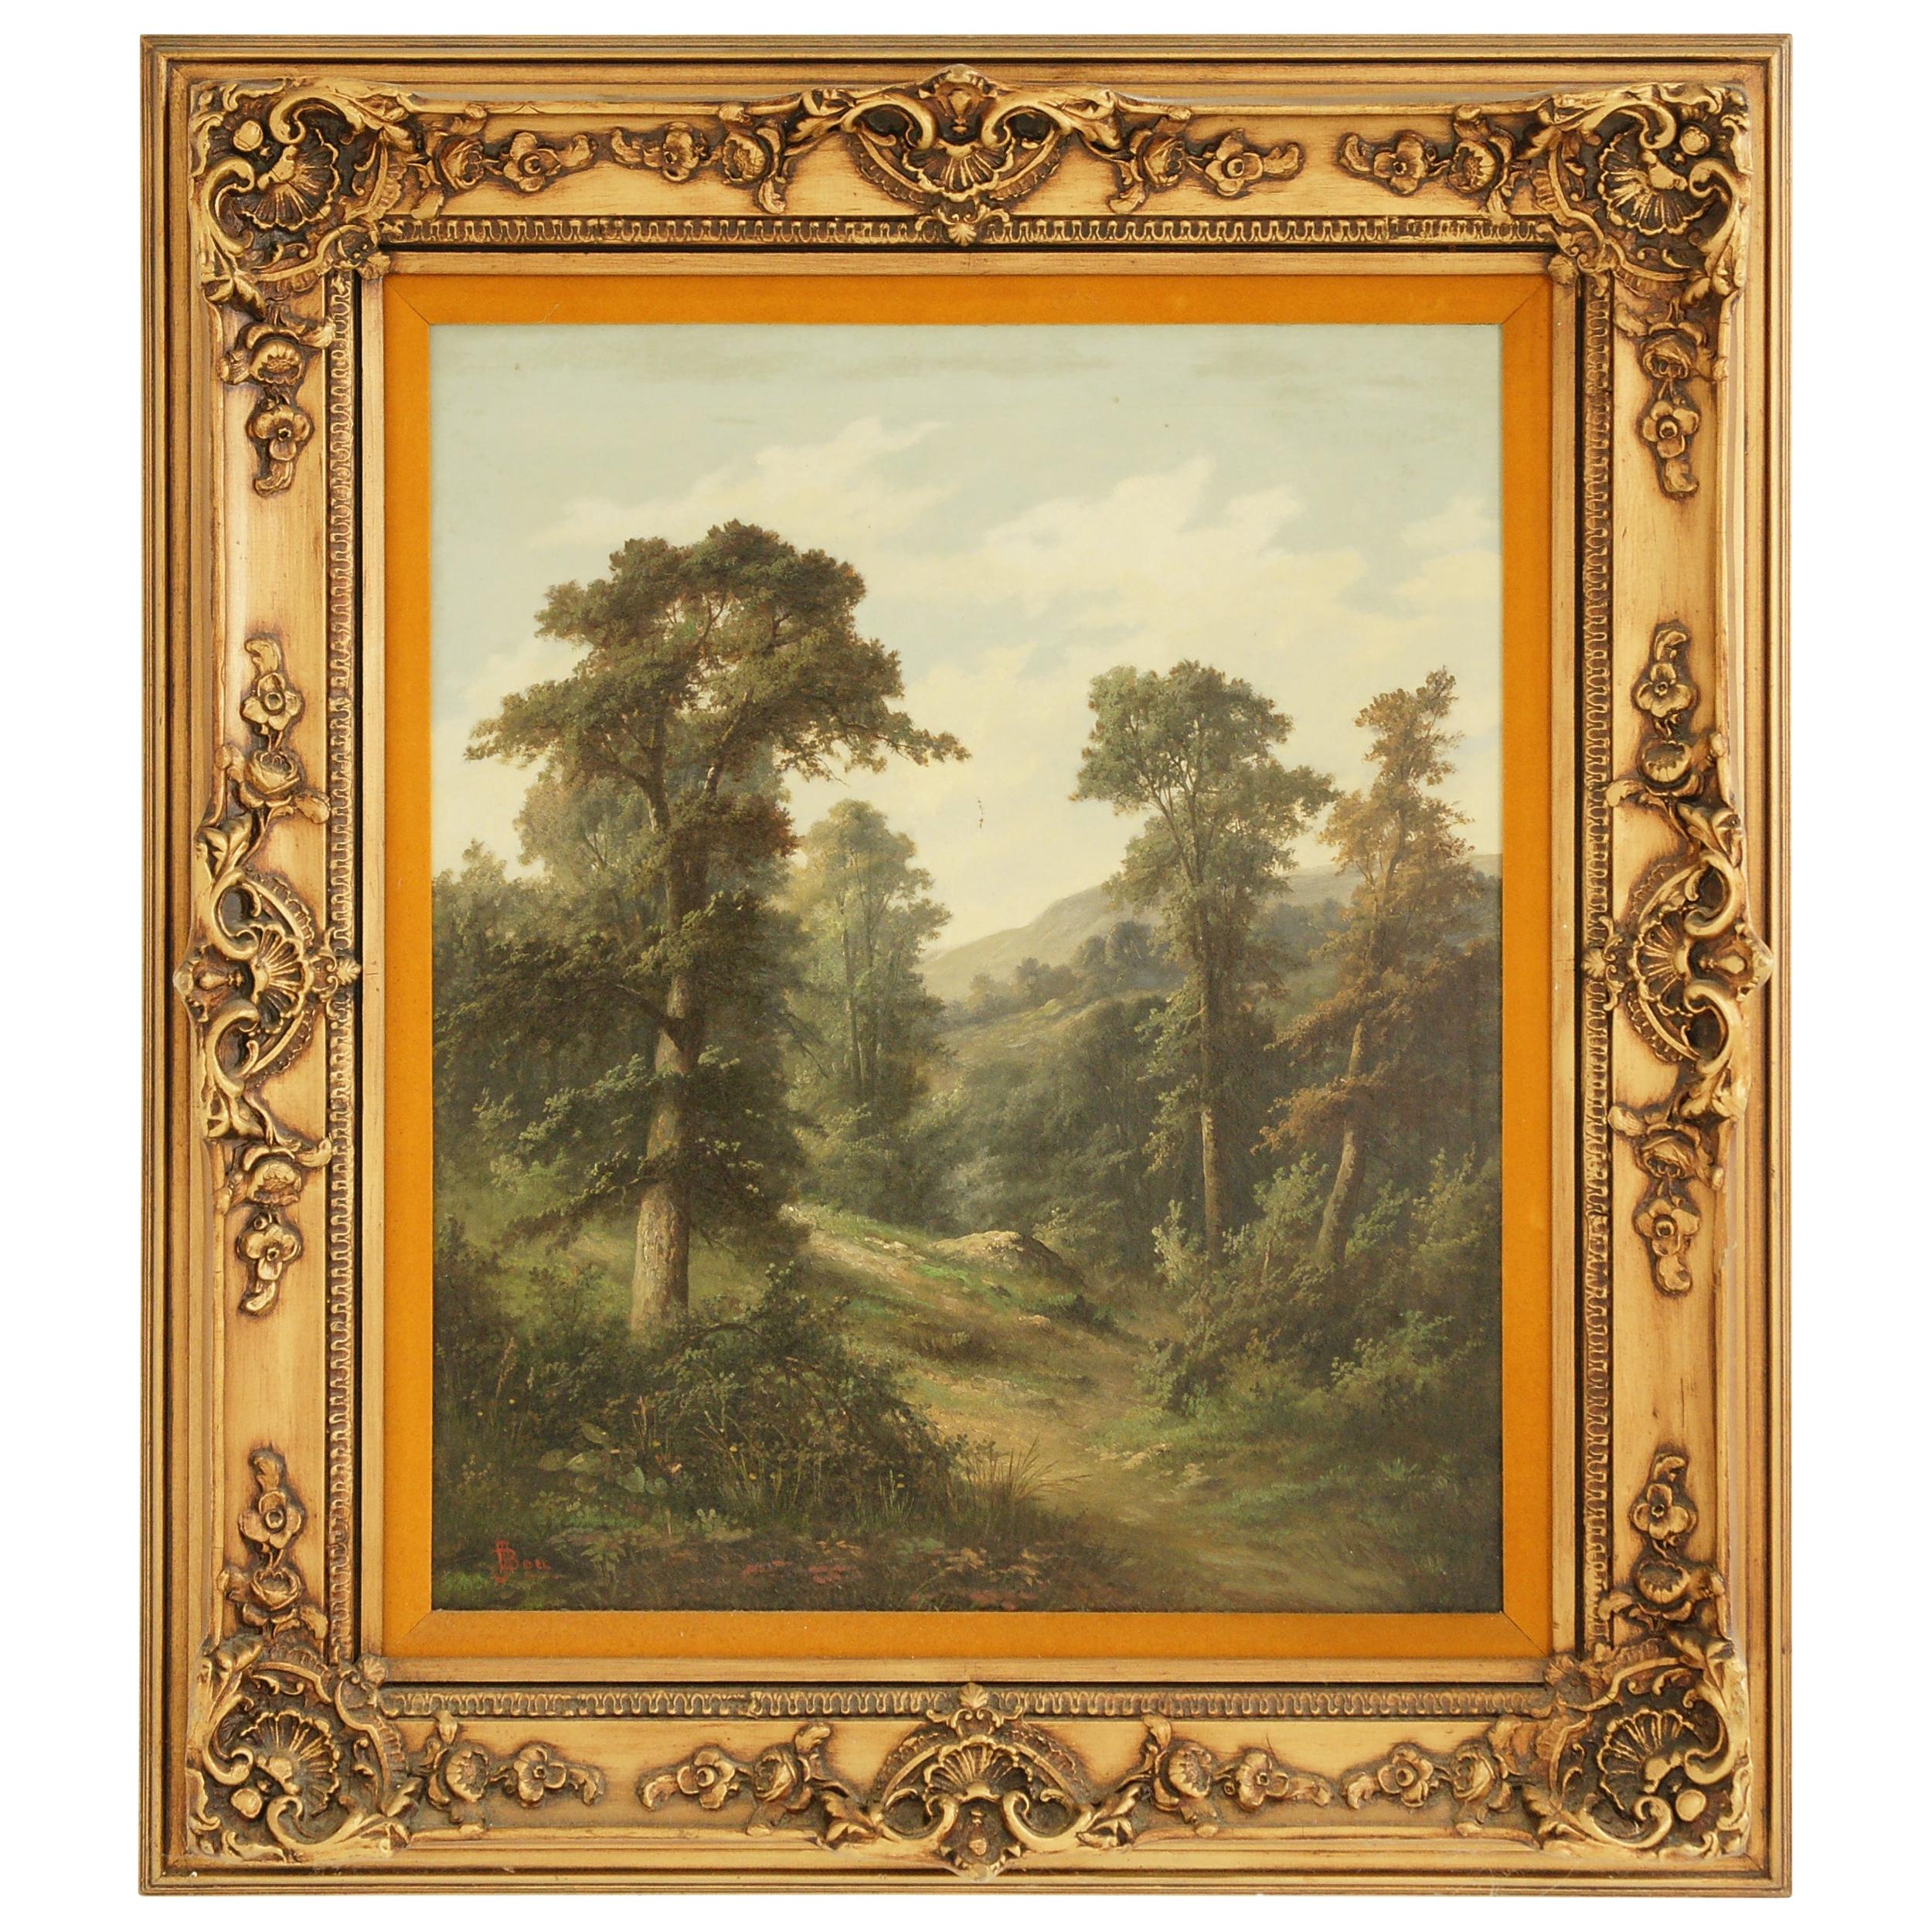 Antique Framed Signed Oil Painting, Landscape, John Henry Boel 1853-1922, B712